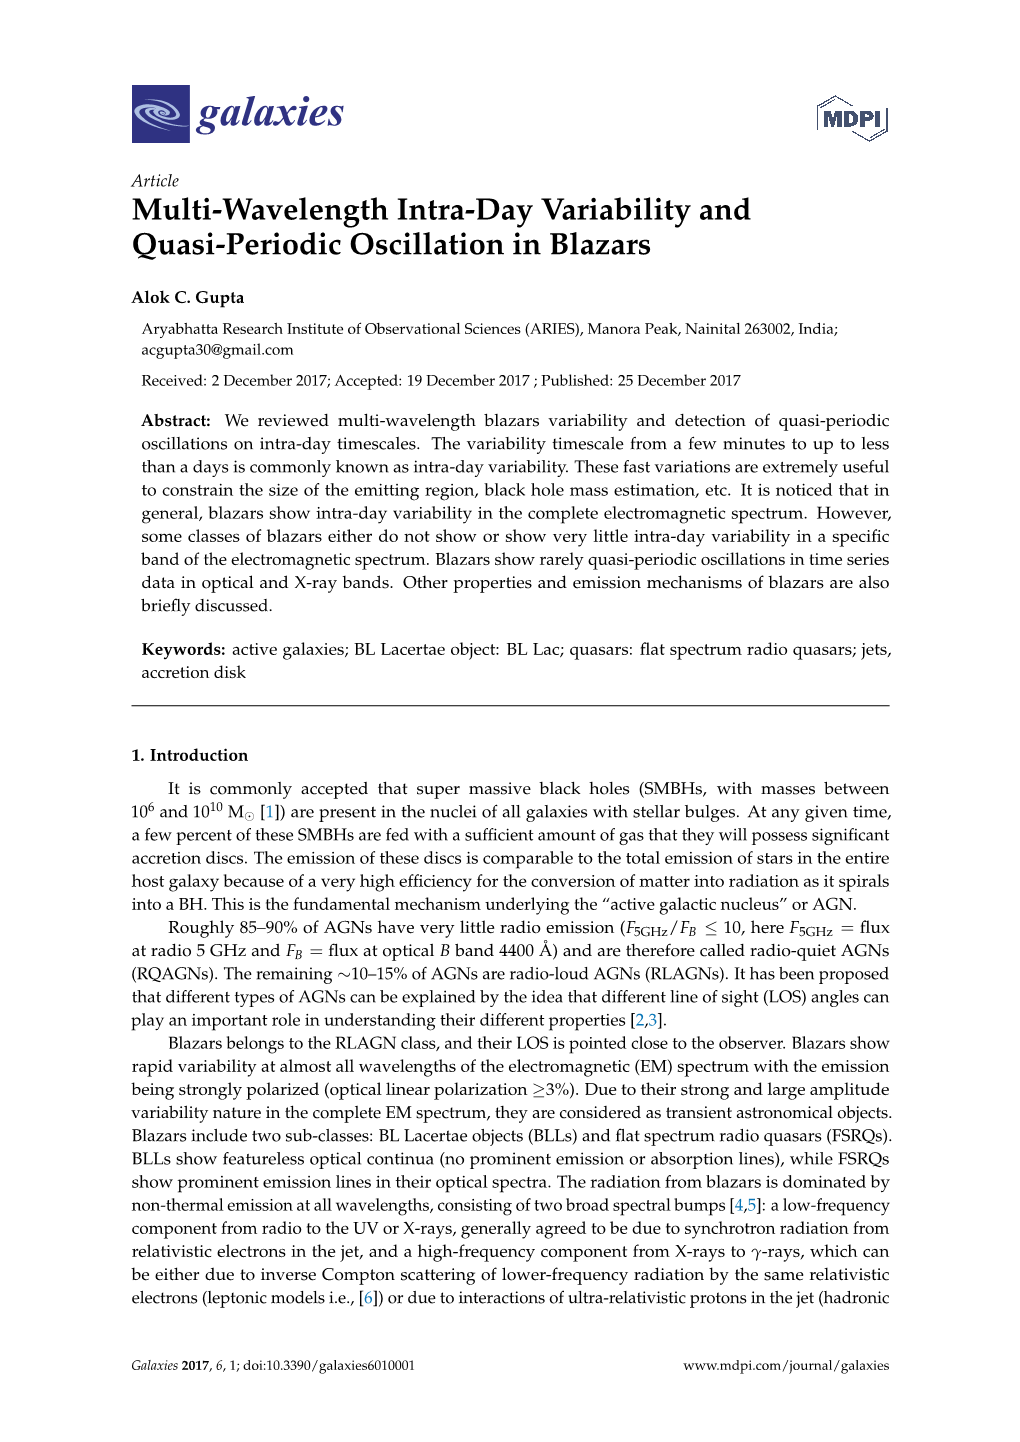 Multi-Wavelength Intra-Day Variability and Quasi-Periodic Oscillation in Blazars